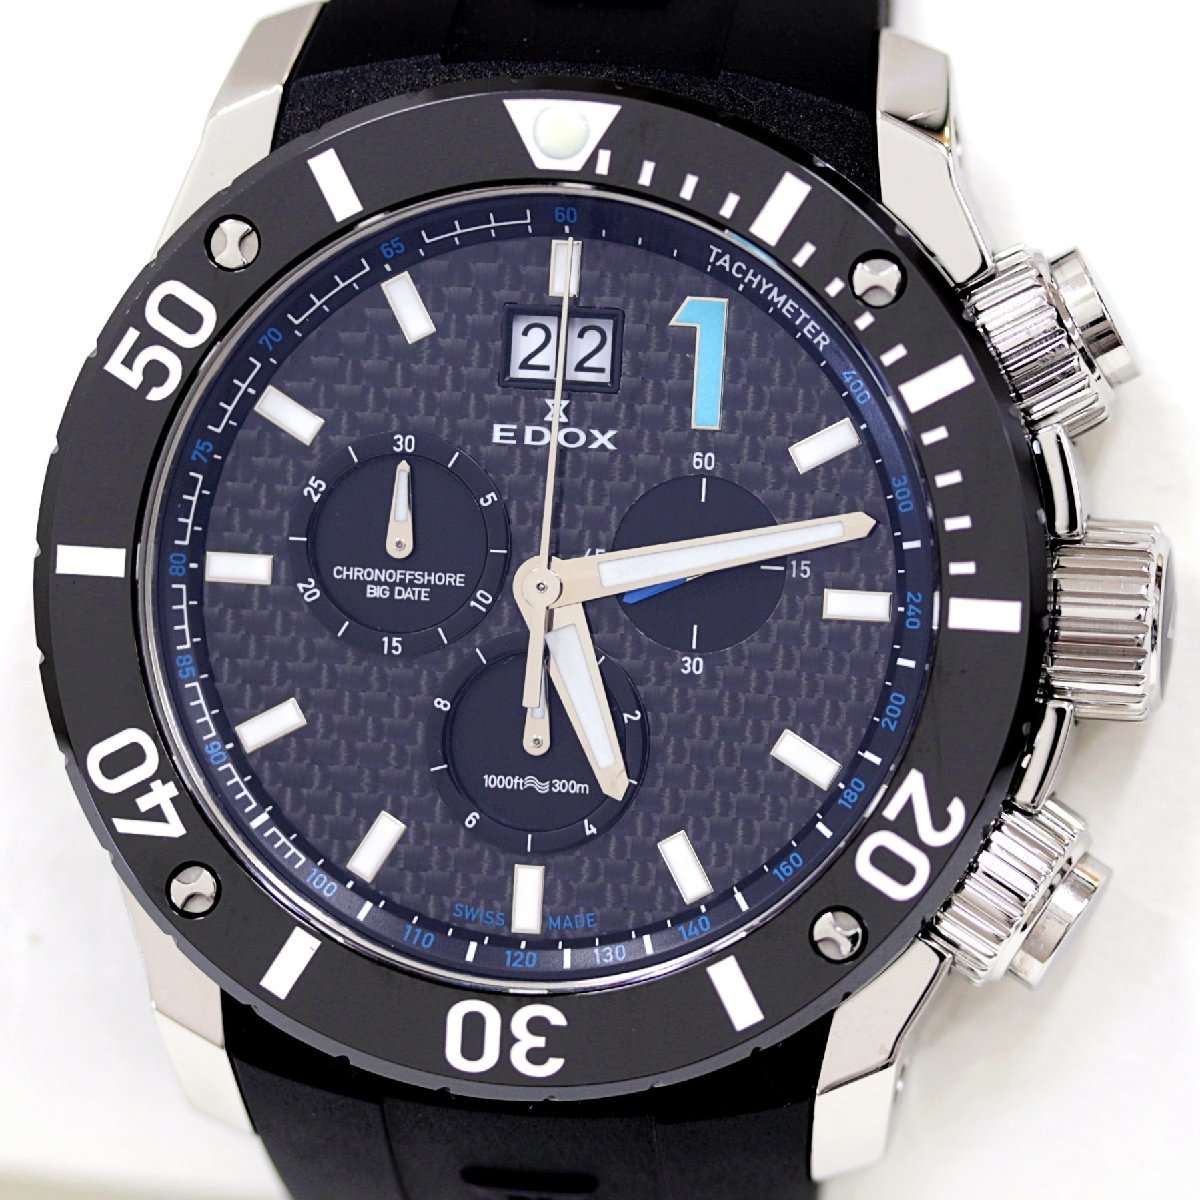  Ed ks Chrono offshore 1 большой Date 10020-3-NBU наручные часы хронограф кварц мужской 